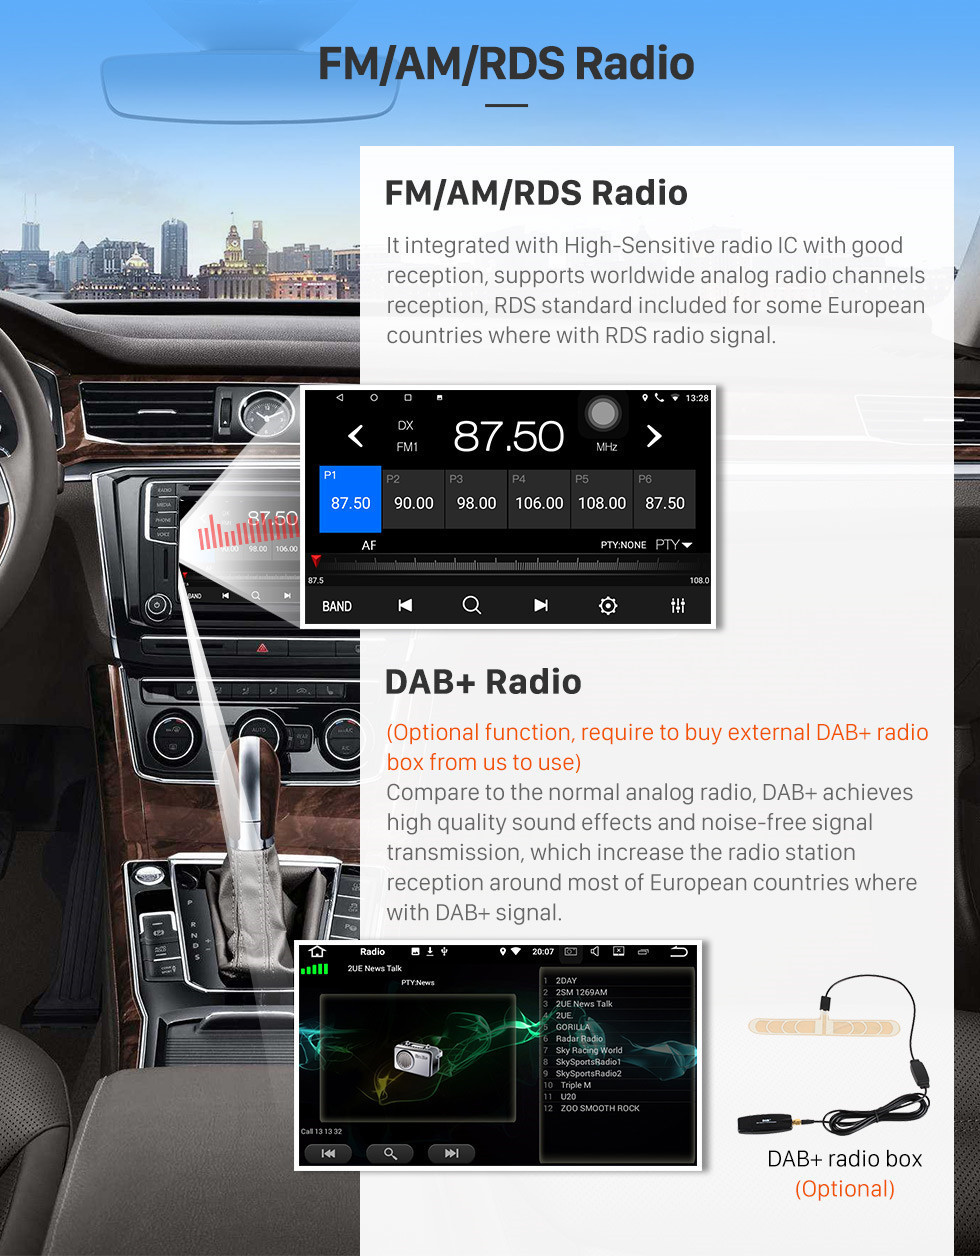 Seicane 9 inch Android 10.0 Touchscreen 2011-2015 KIA K2 RIO Radio GPS Navigation System with DVR Bluetooth Steering Wheel Control Backup Camera Mirror Link OBD2 Digital TV